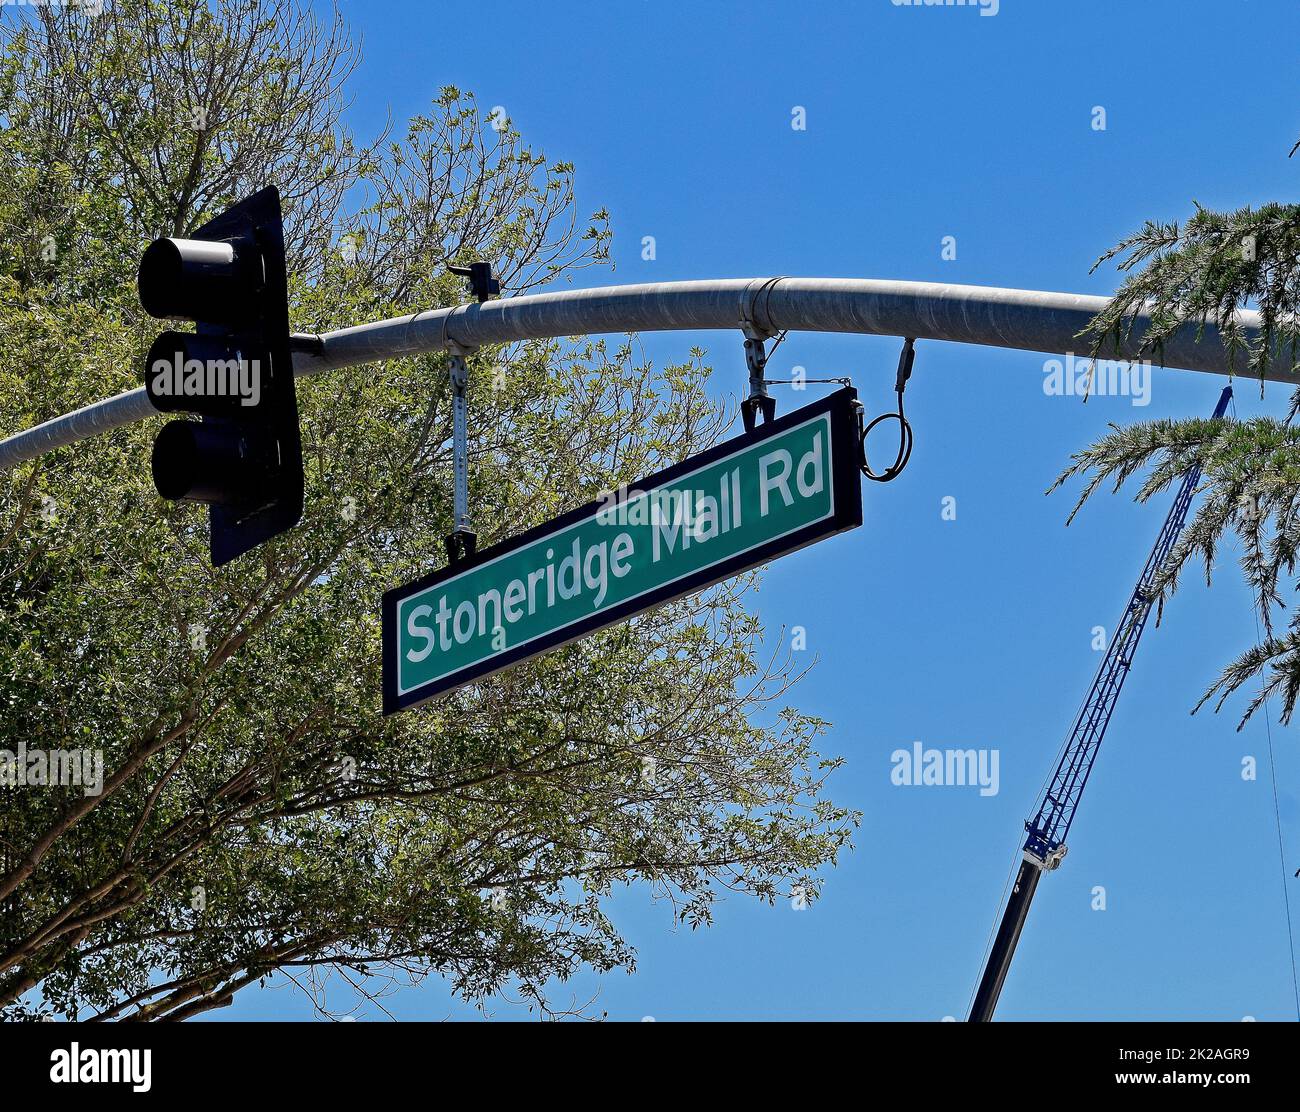 Stoneridge Mall Road sign in Pleasanton, California, USA Stock Photo